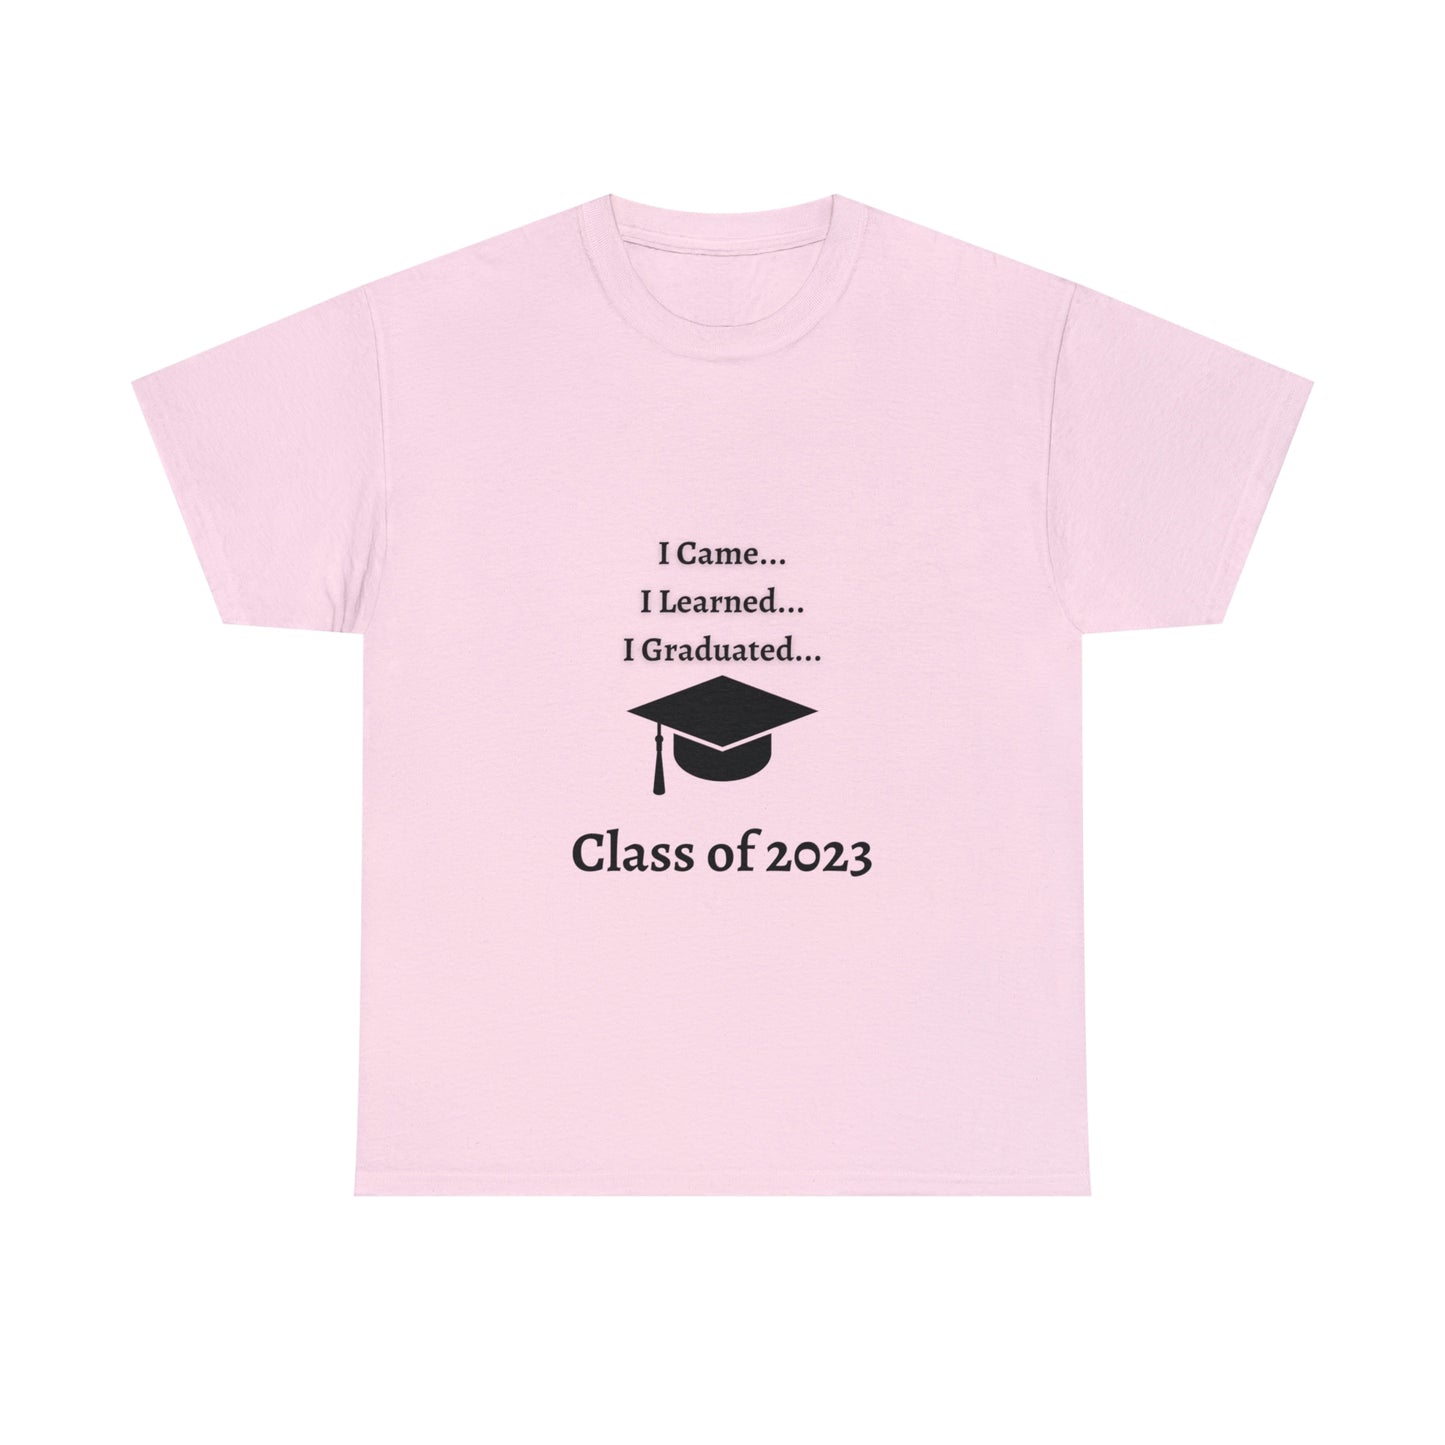 I Came, I Learned, I Graduated T-shirt 2023 Graduation T-shirt